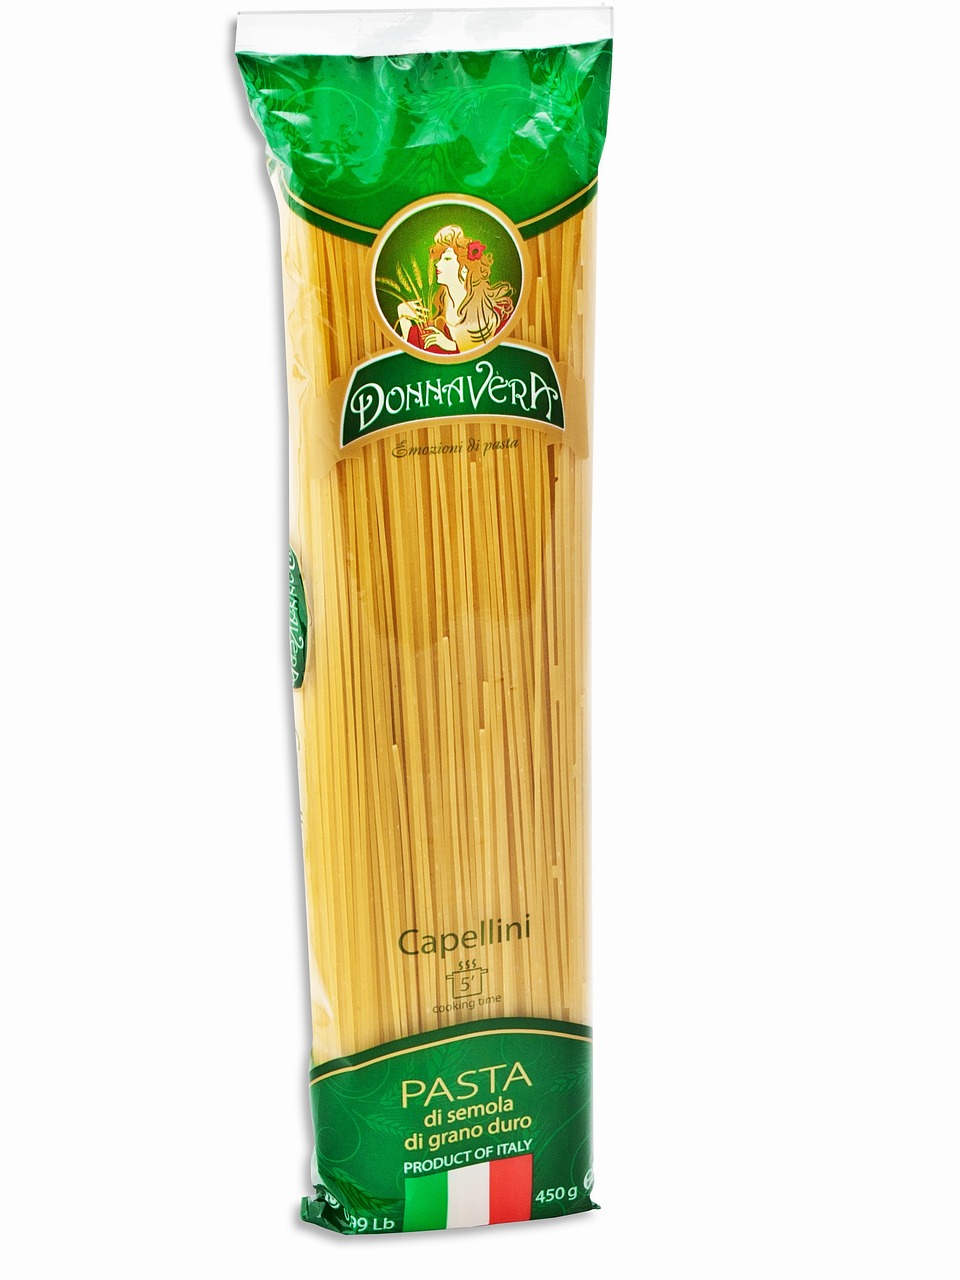 spaghetti pasta products free photo